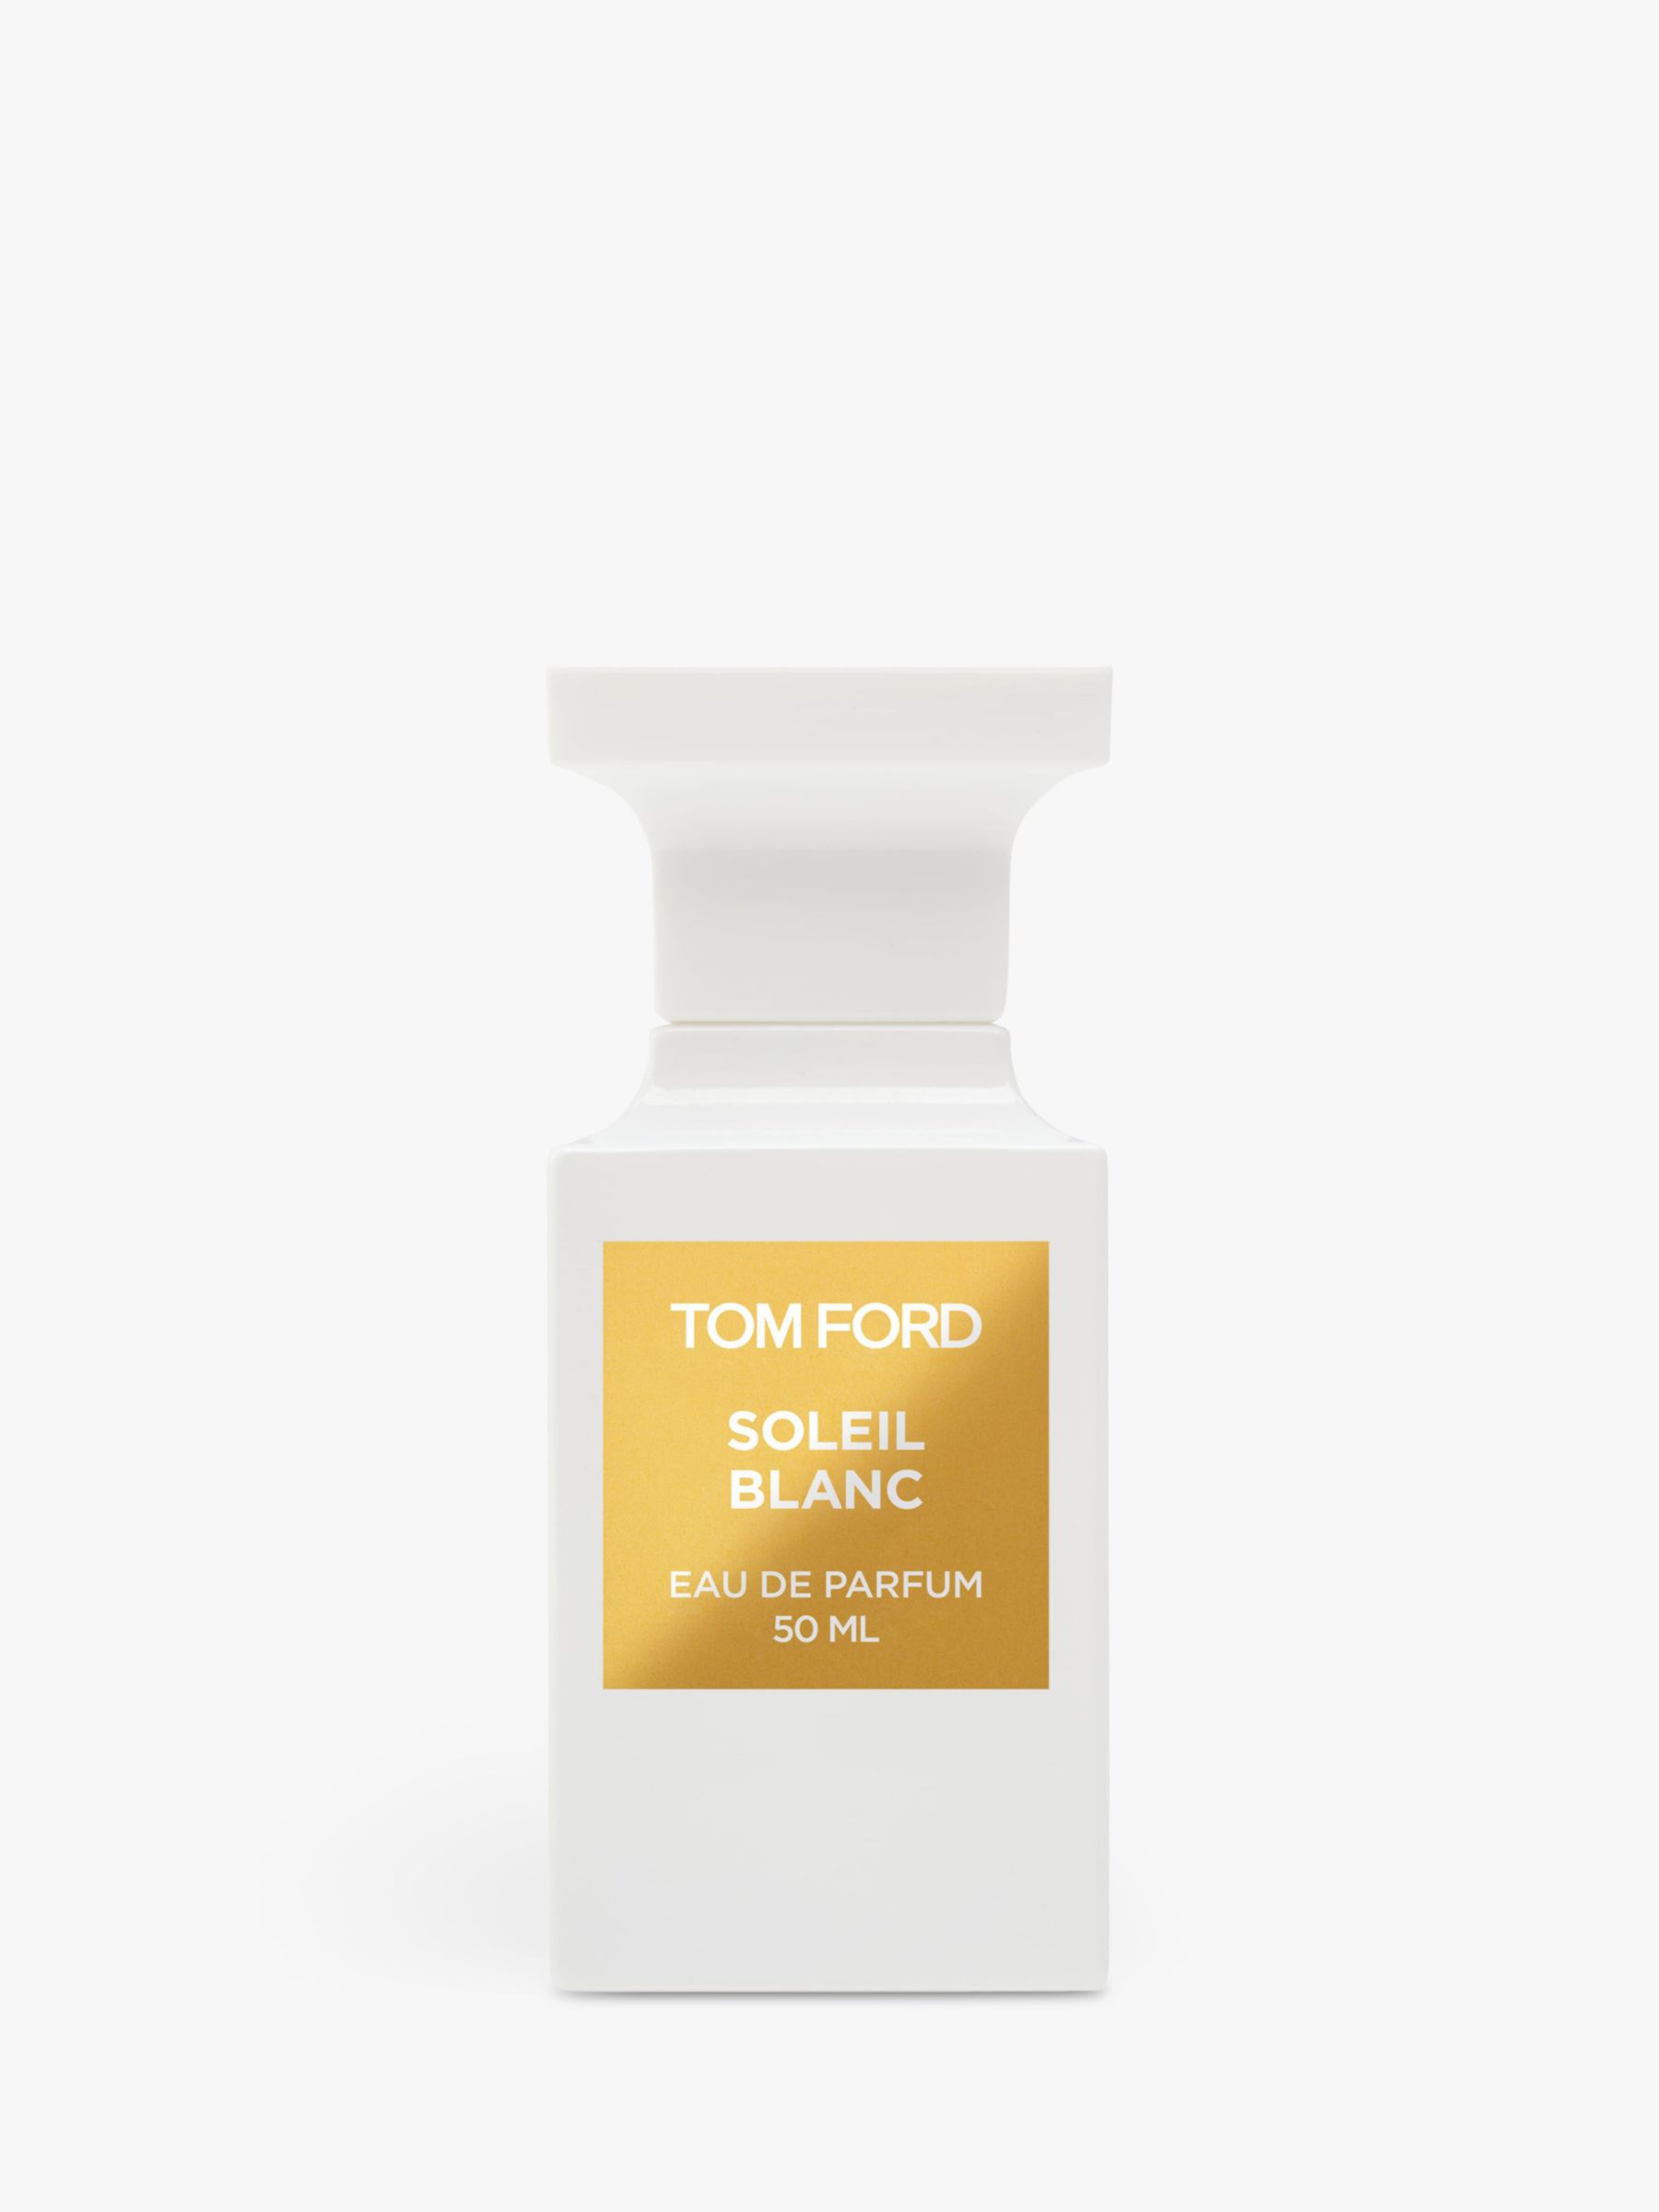 TOM FORD Private Blend Soleil Blanc Eau de Parfum, 50ml at John Lewis &  Partners